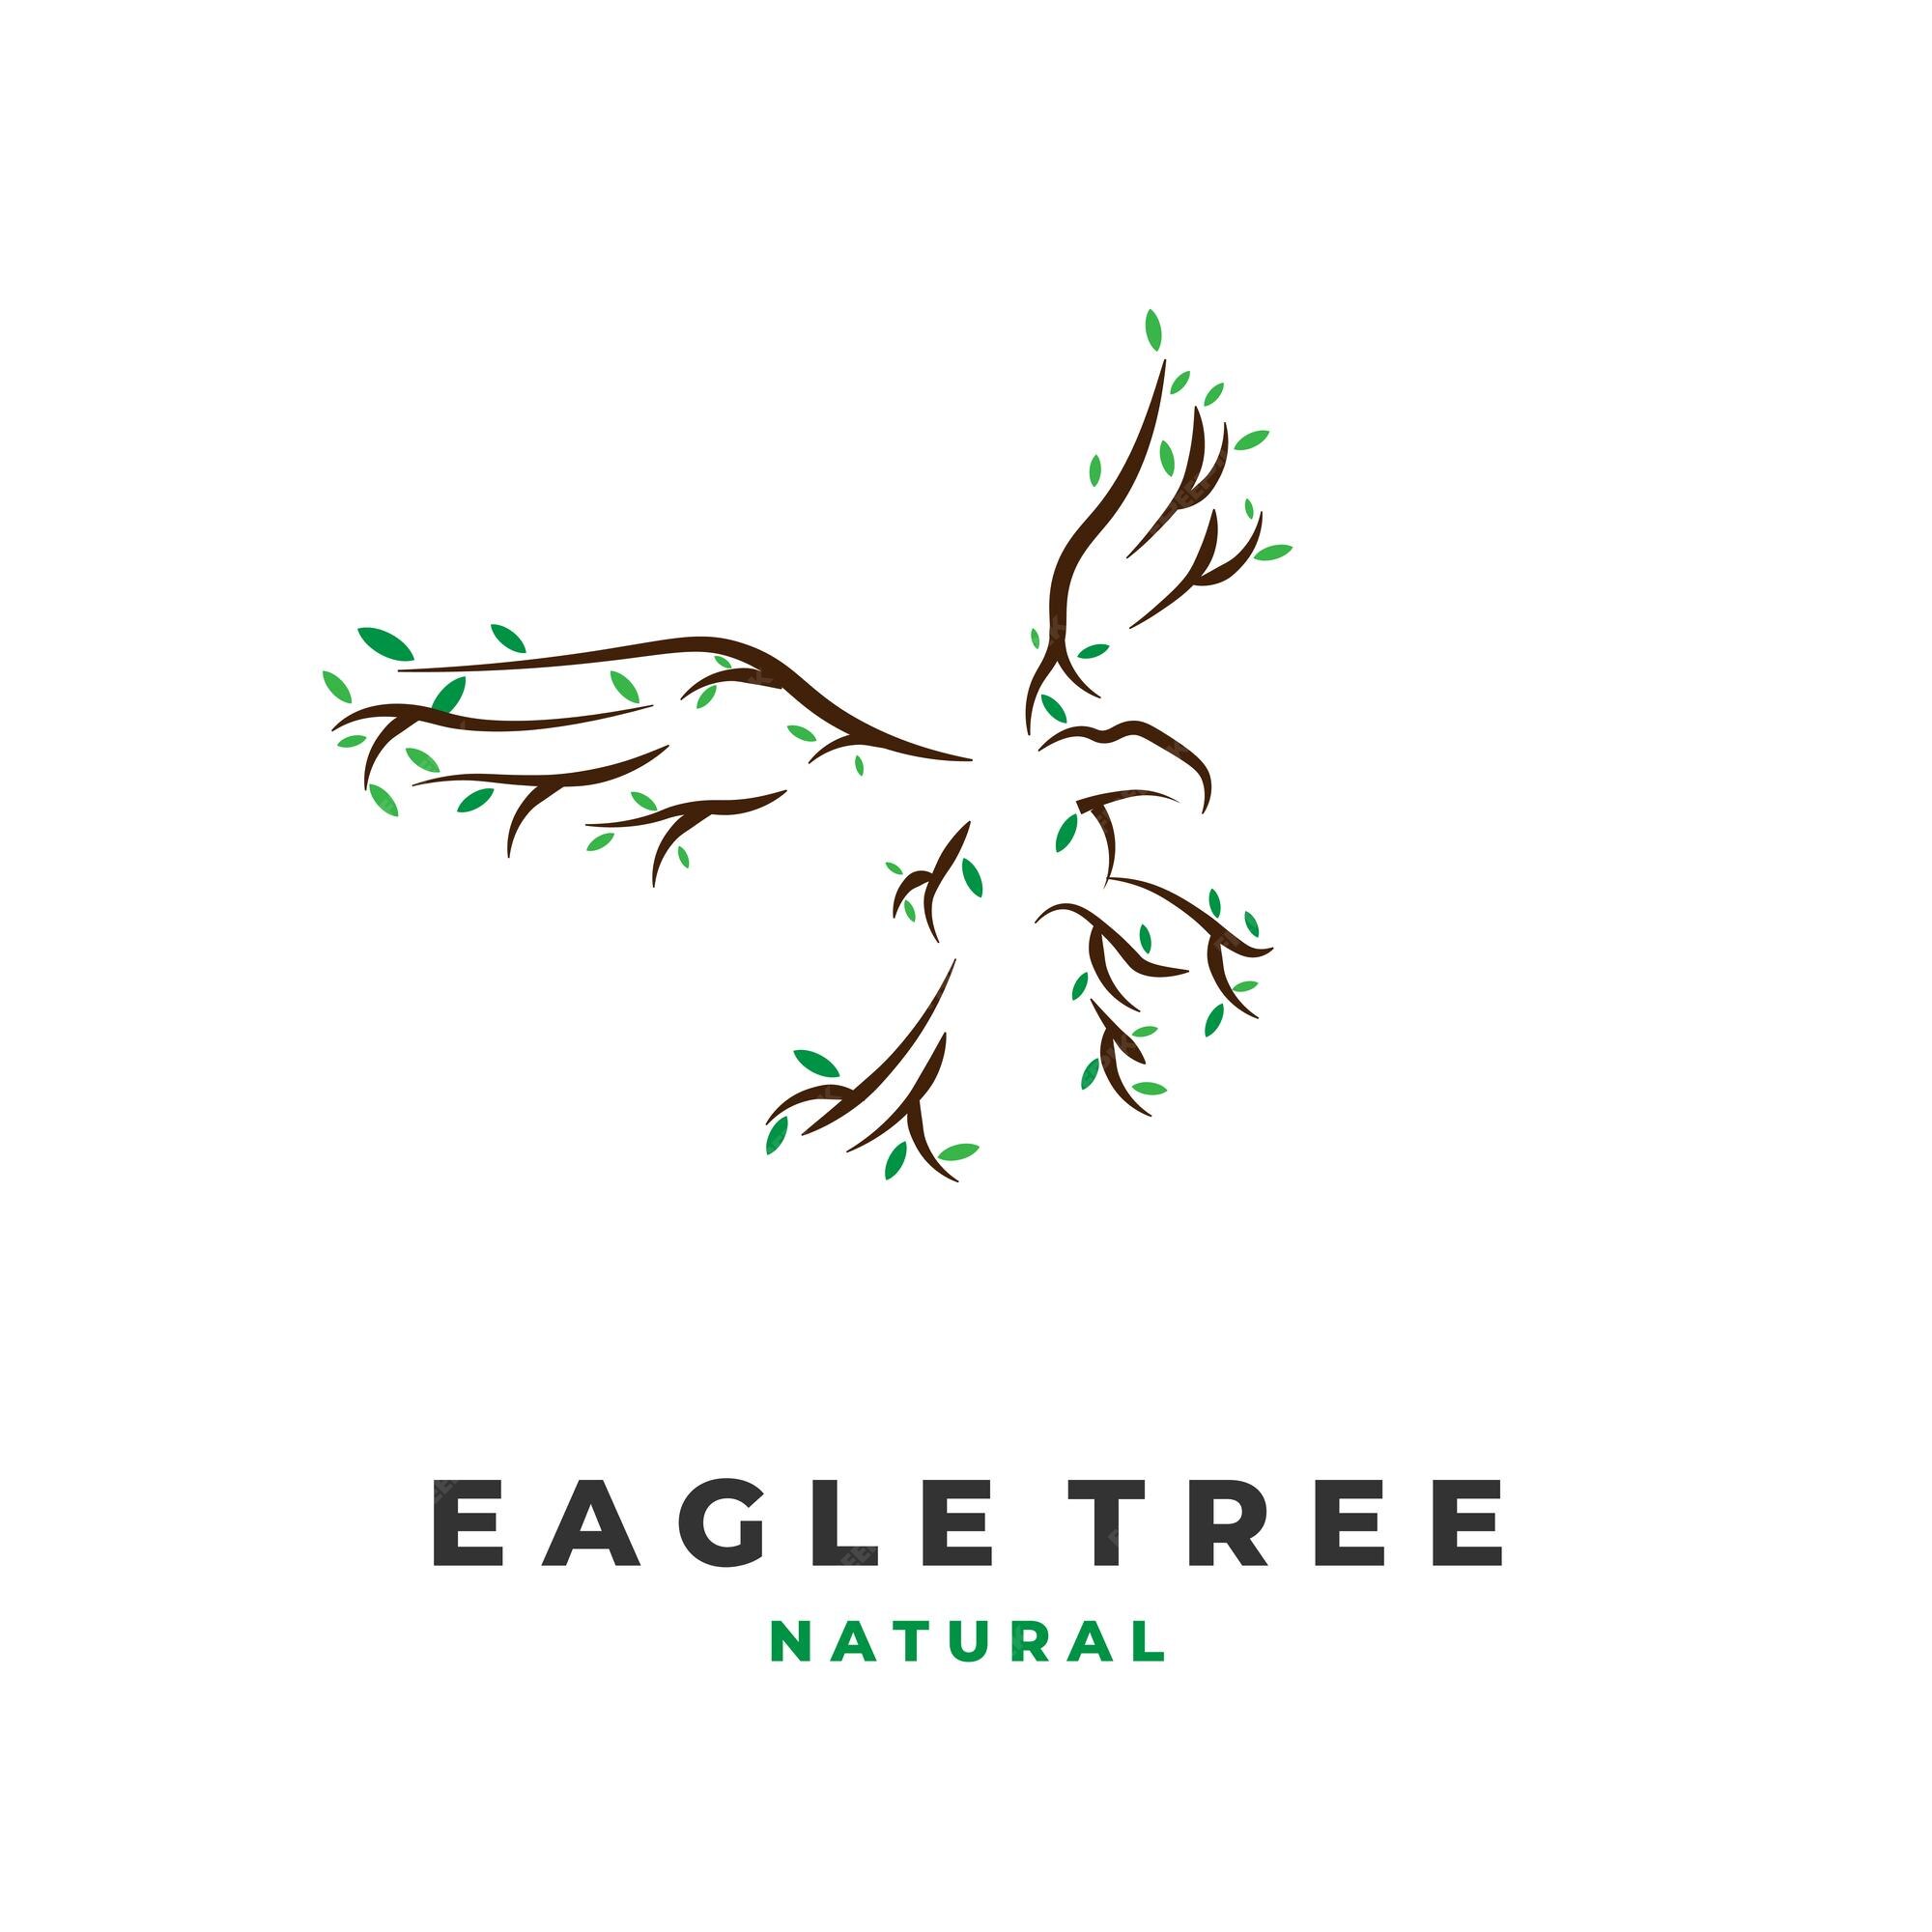 Eagle tree